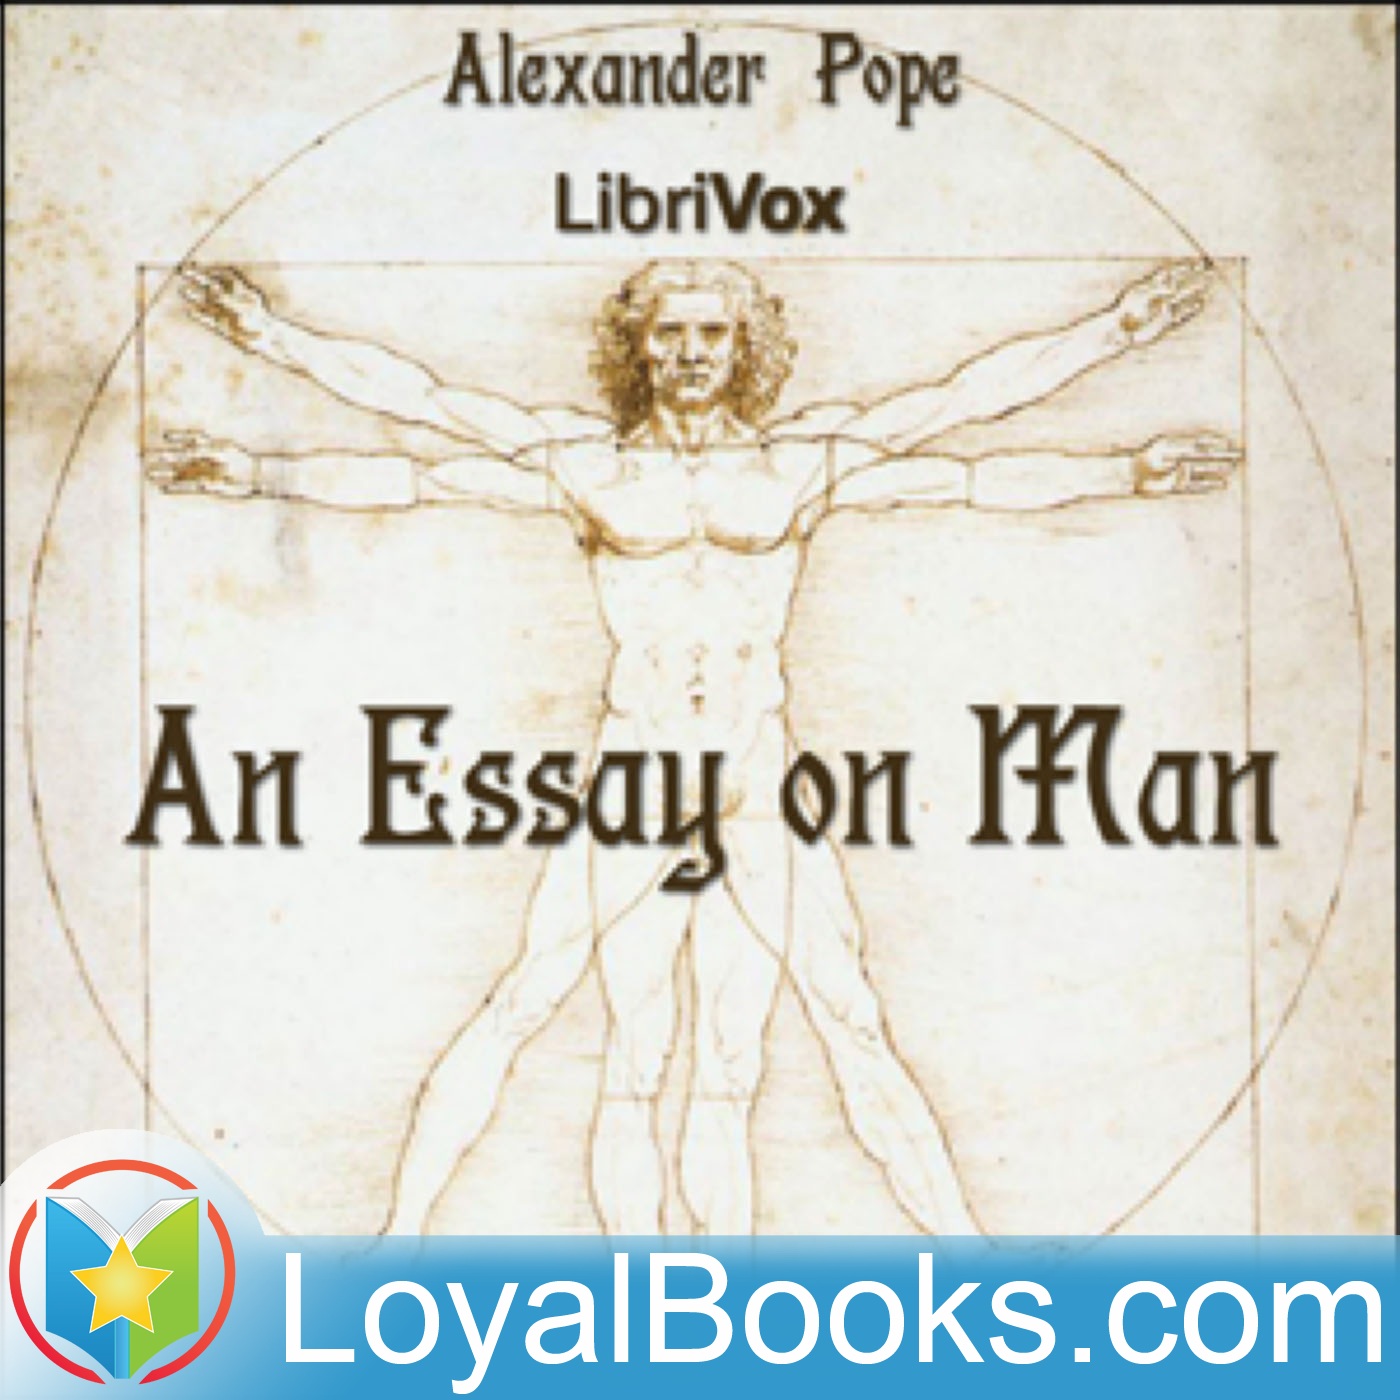 alexander pope essay on man analysis